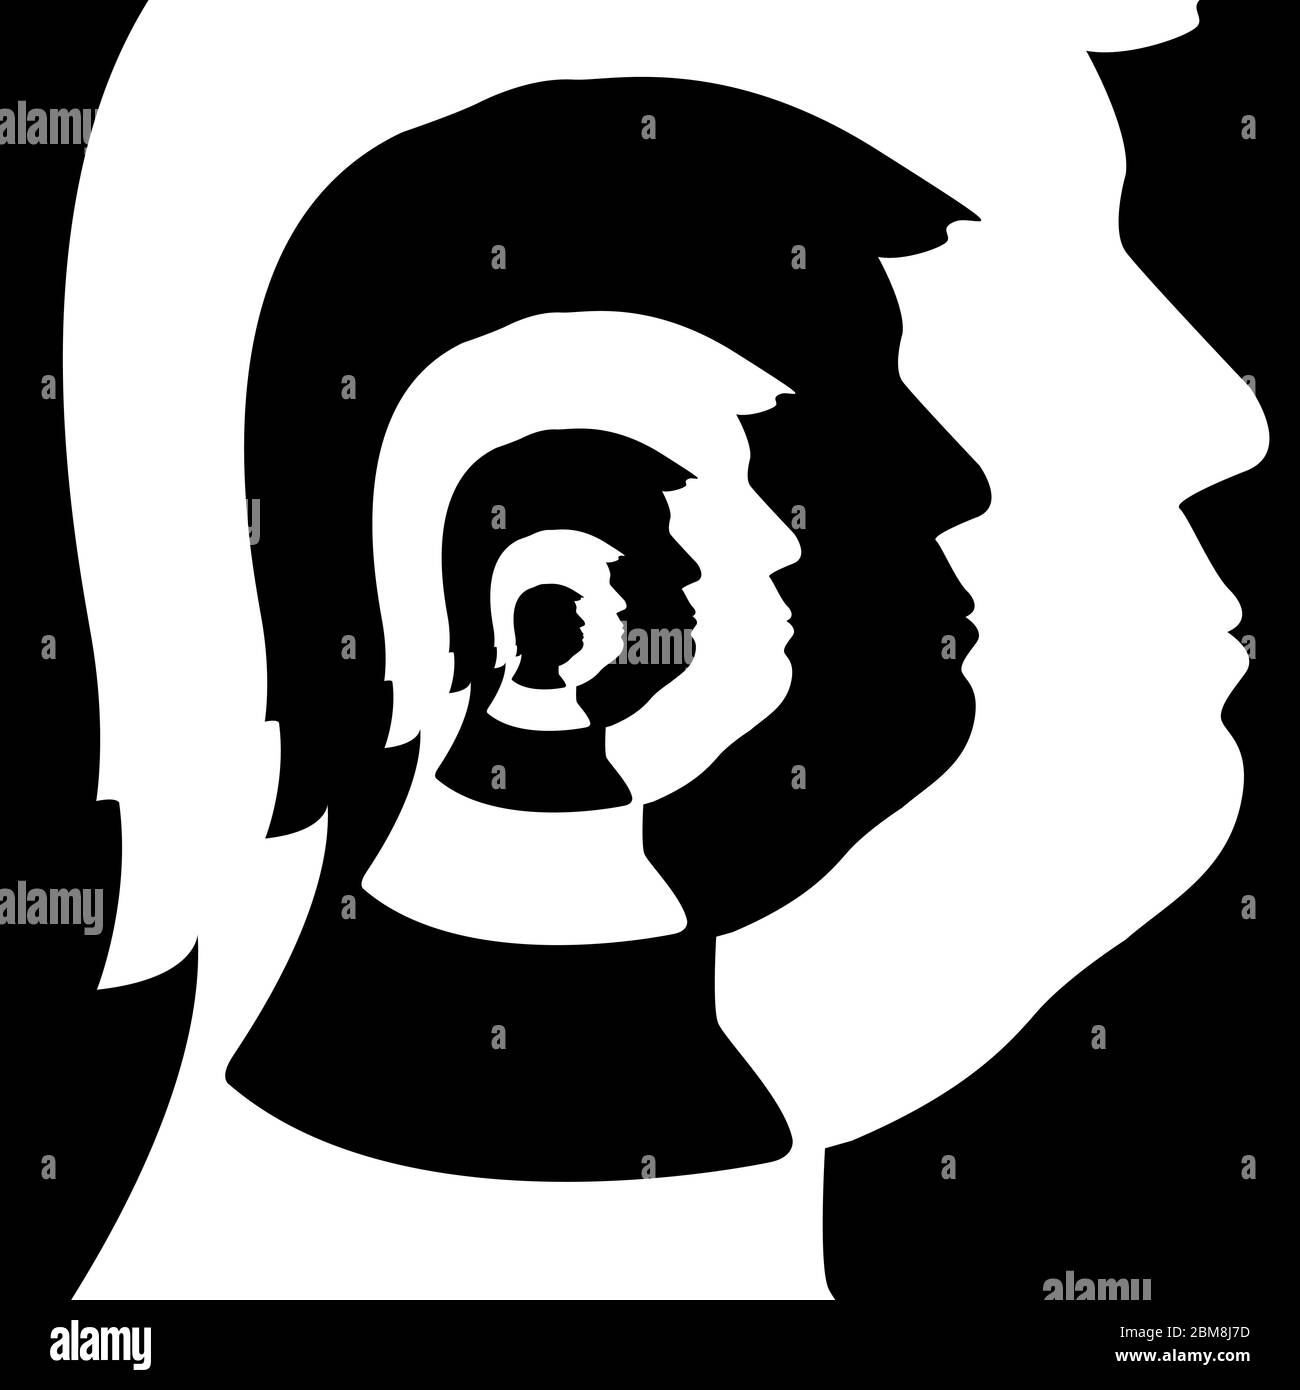 Donald Trump silhouette portrait, US president, vector illustration, zoom effect Stock Vector